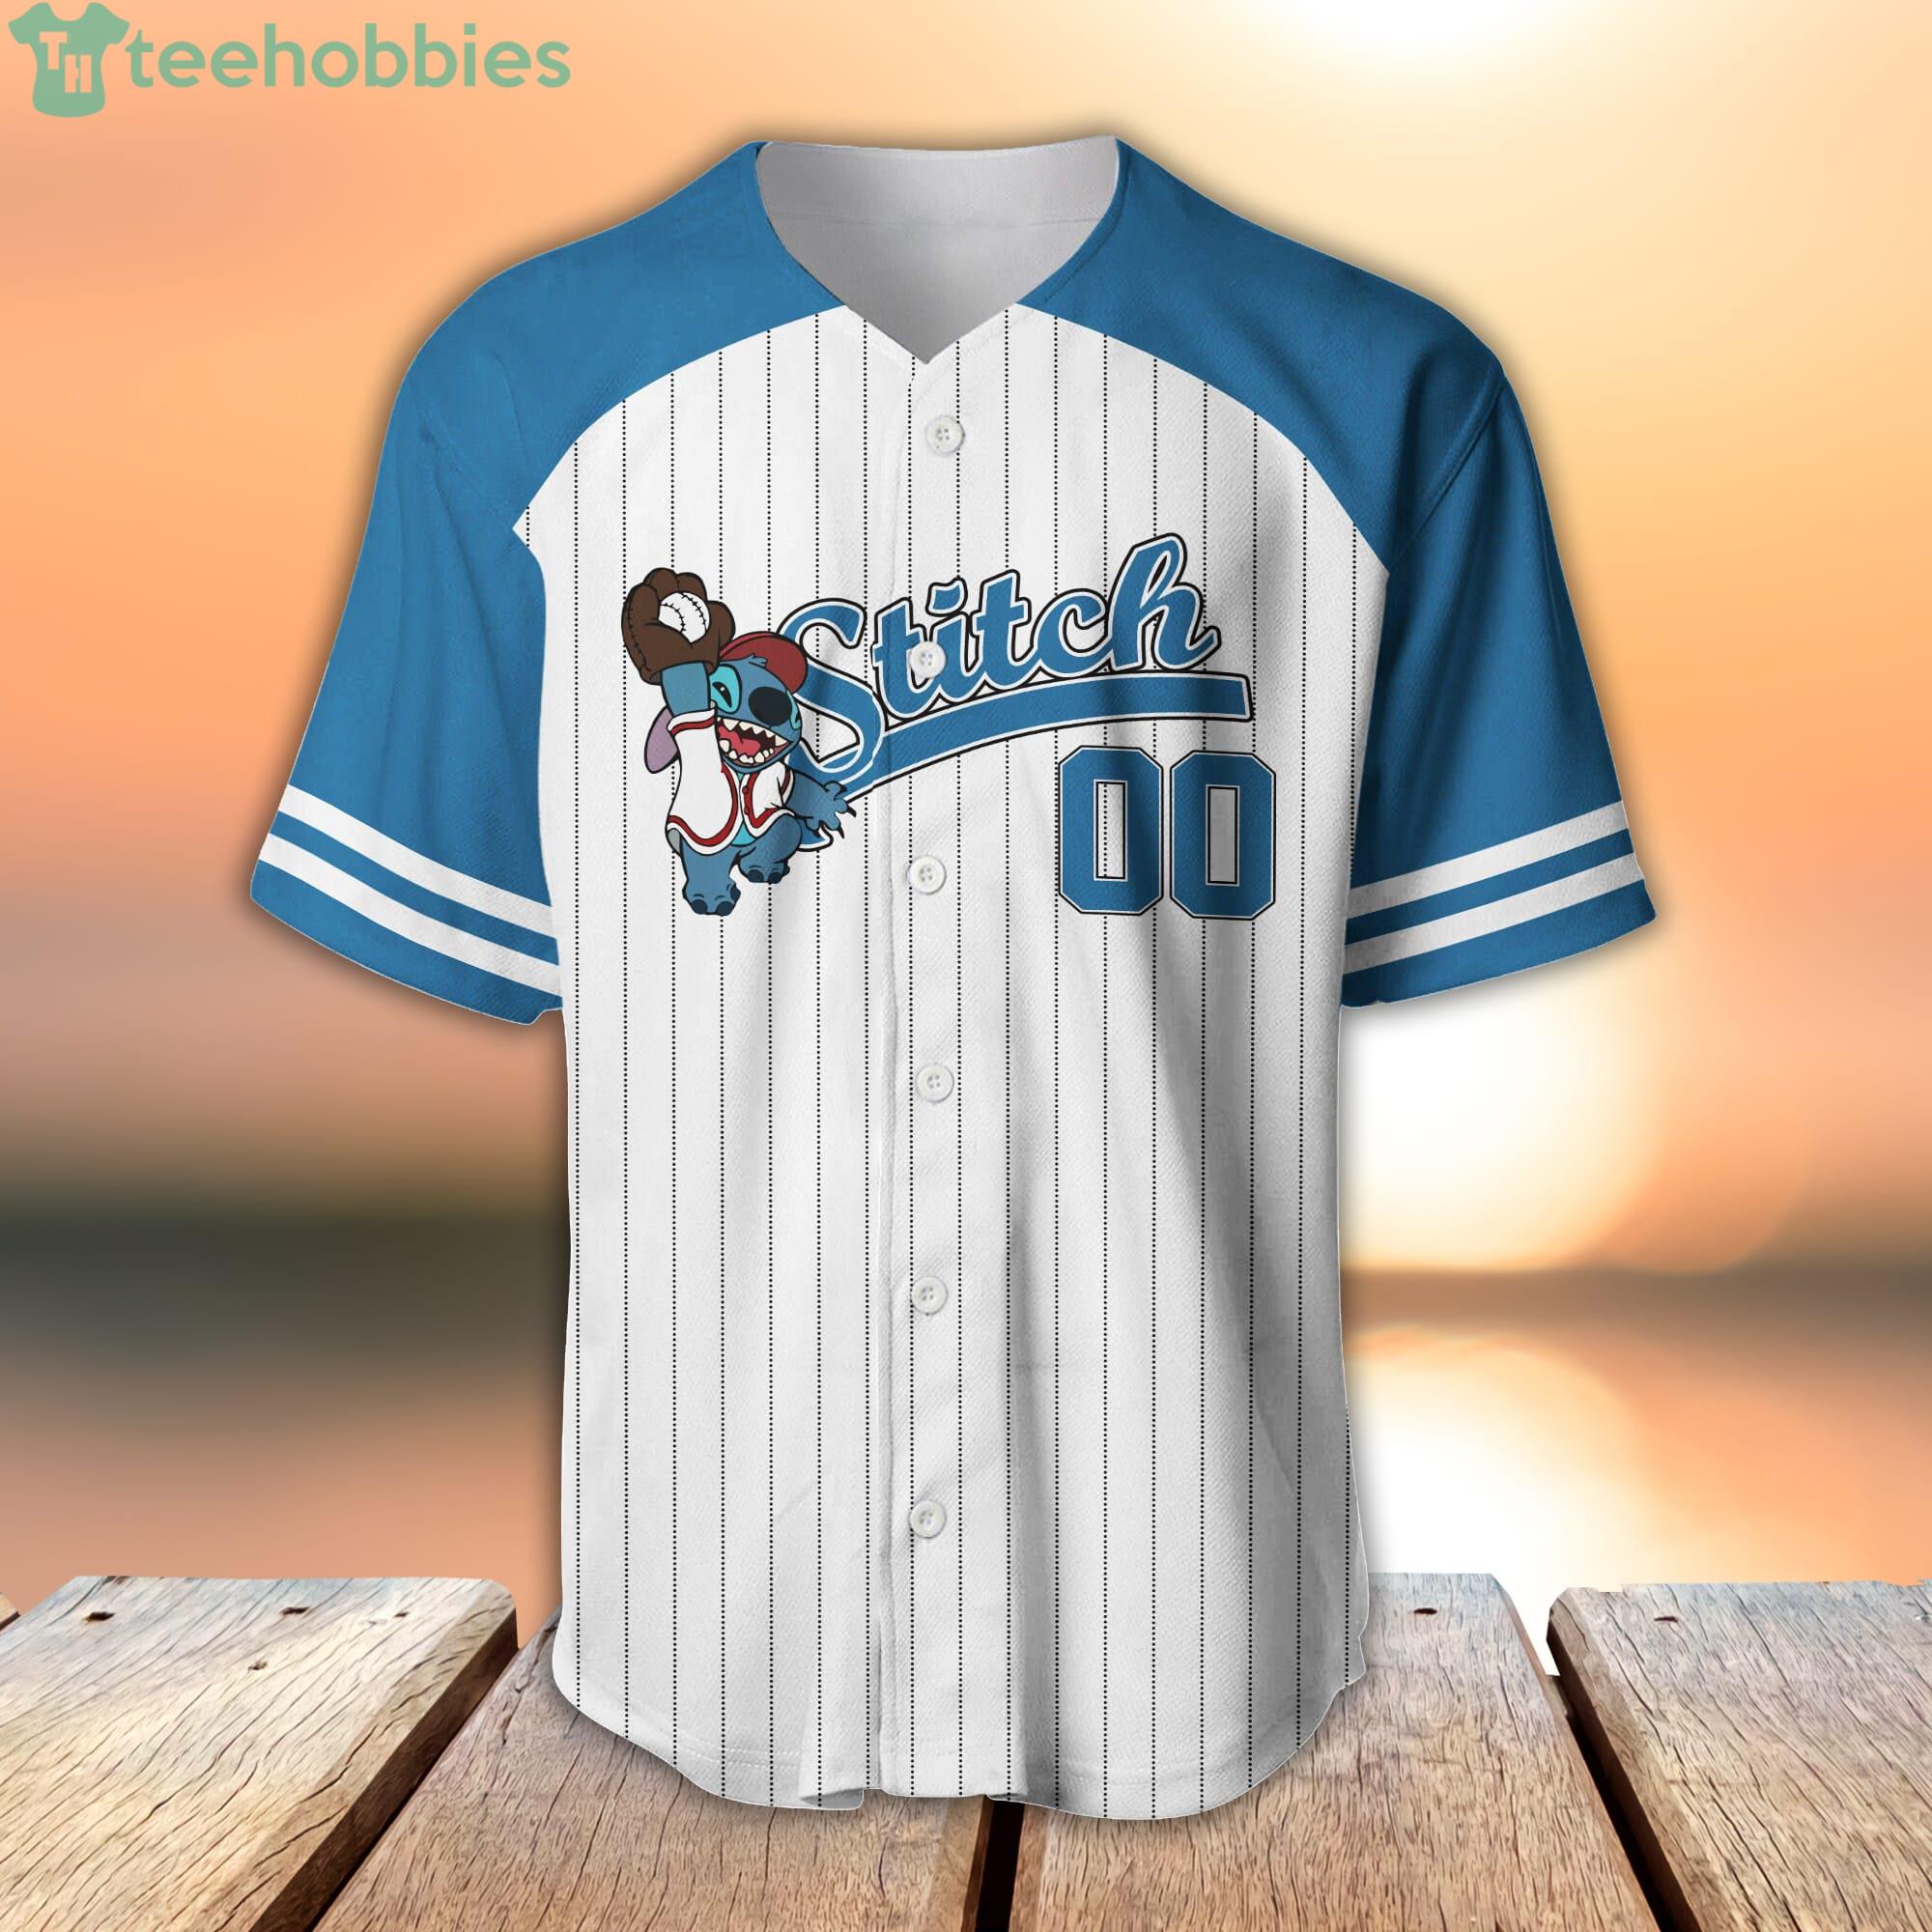 Milwaukee Brewers Lilo & Stitch Jersey Baseball Shirt Navy Custom Number  And Name - Banantees